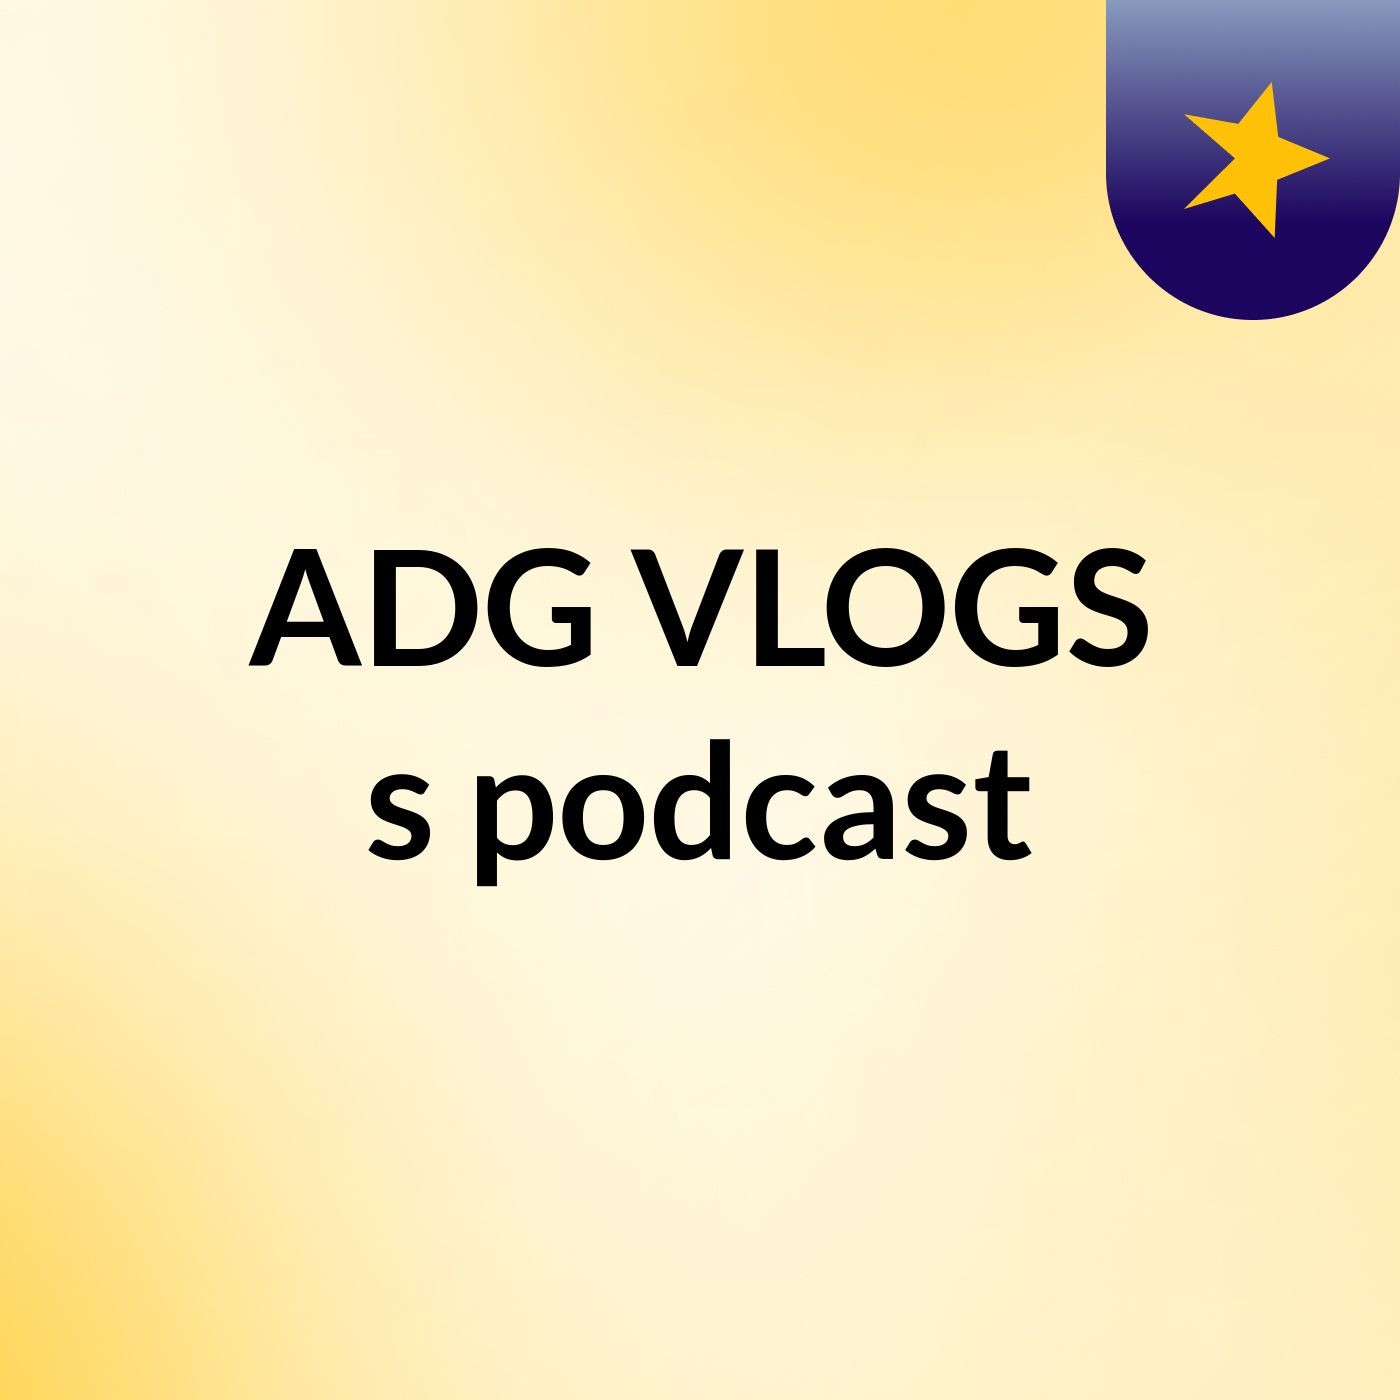 ADG VLOGS's podcast